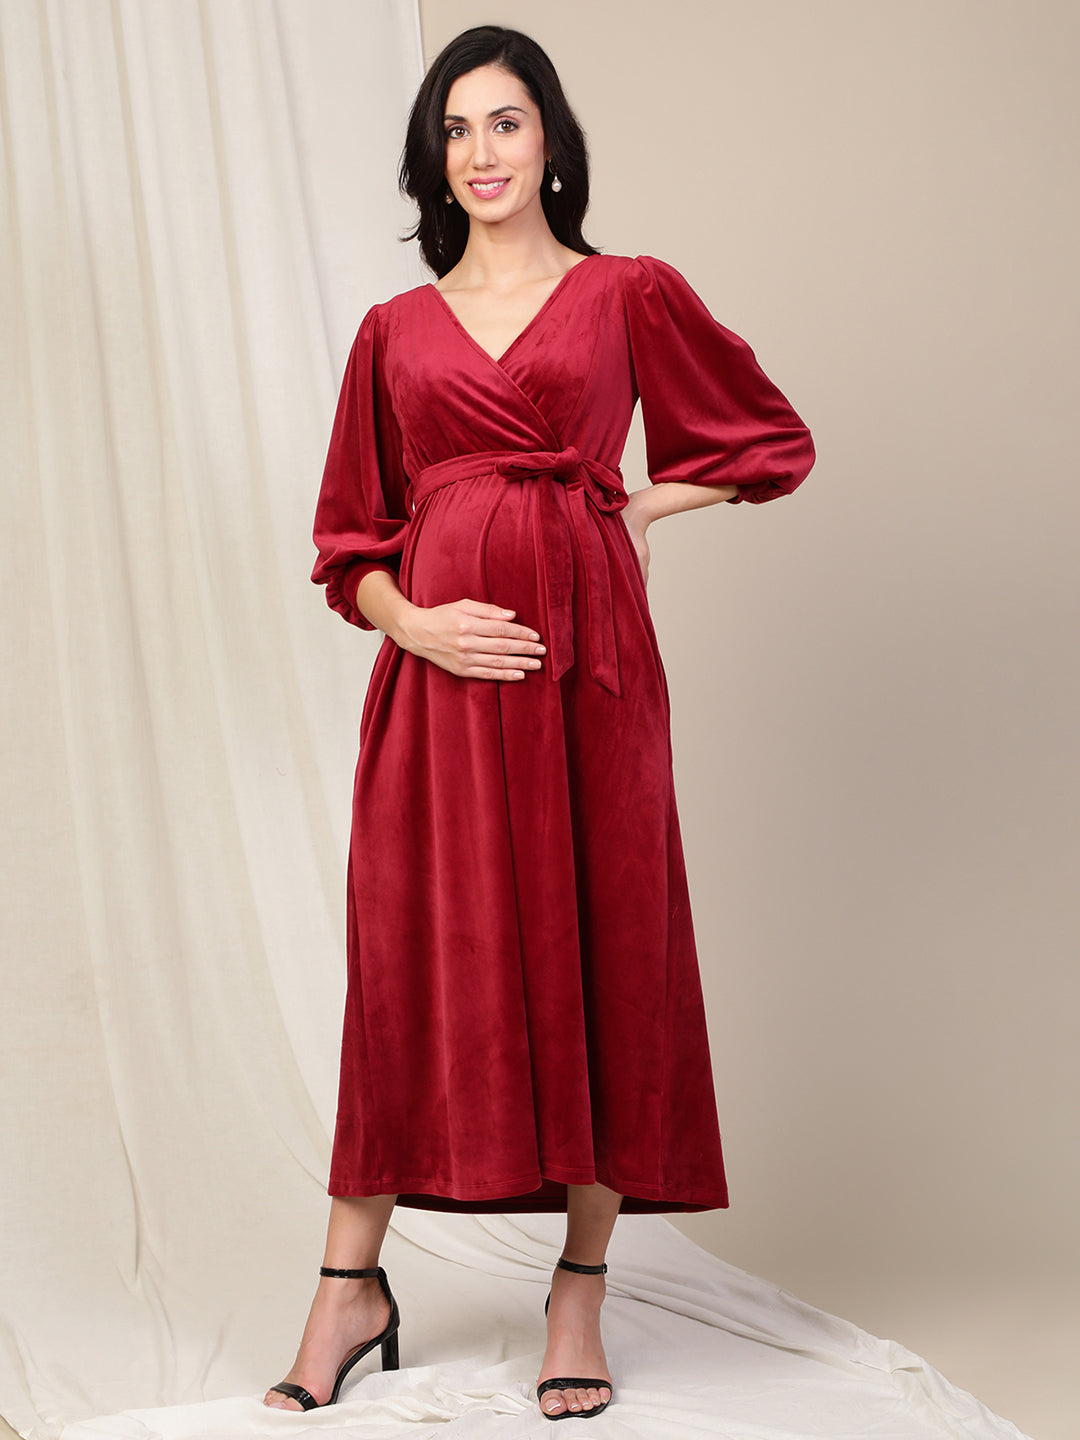 Buy Womens Maternity Dresses & Pregnancy Dresses Online - Apella